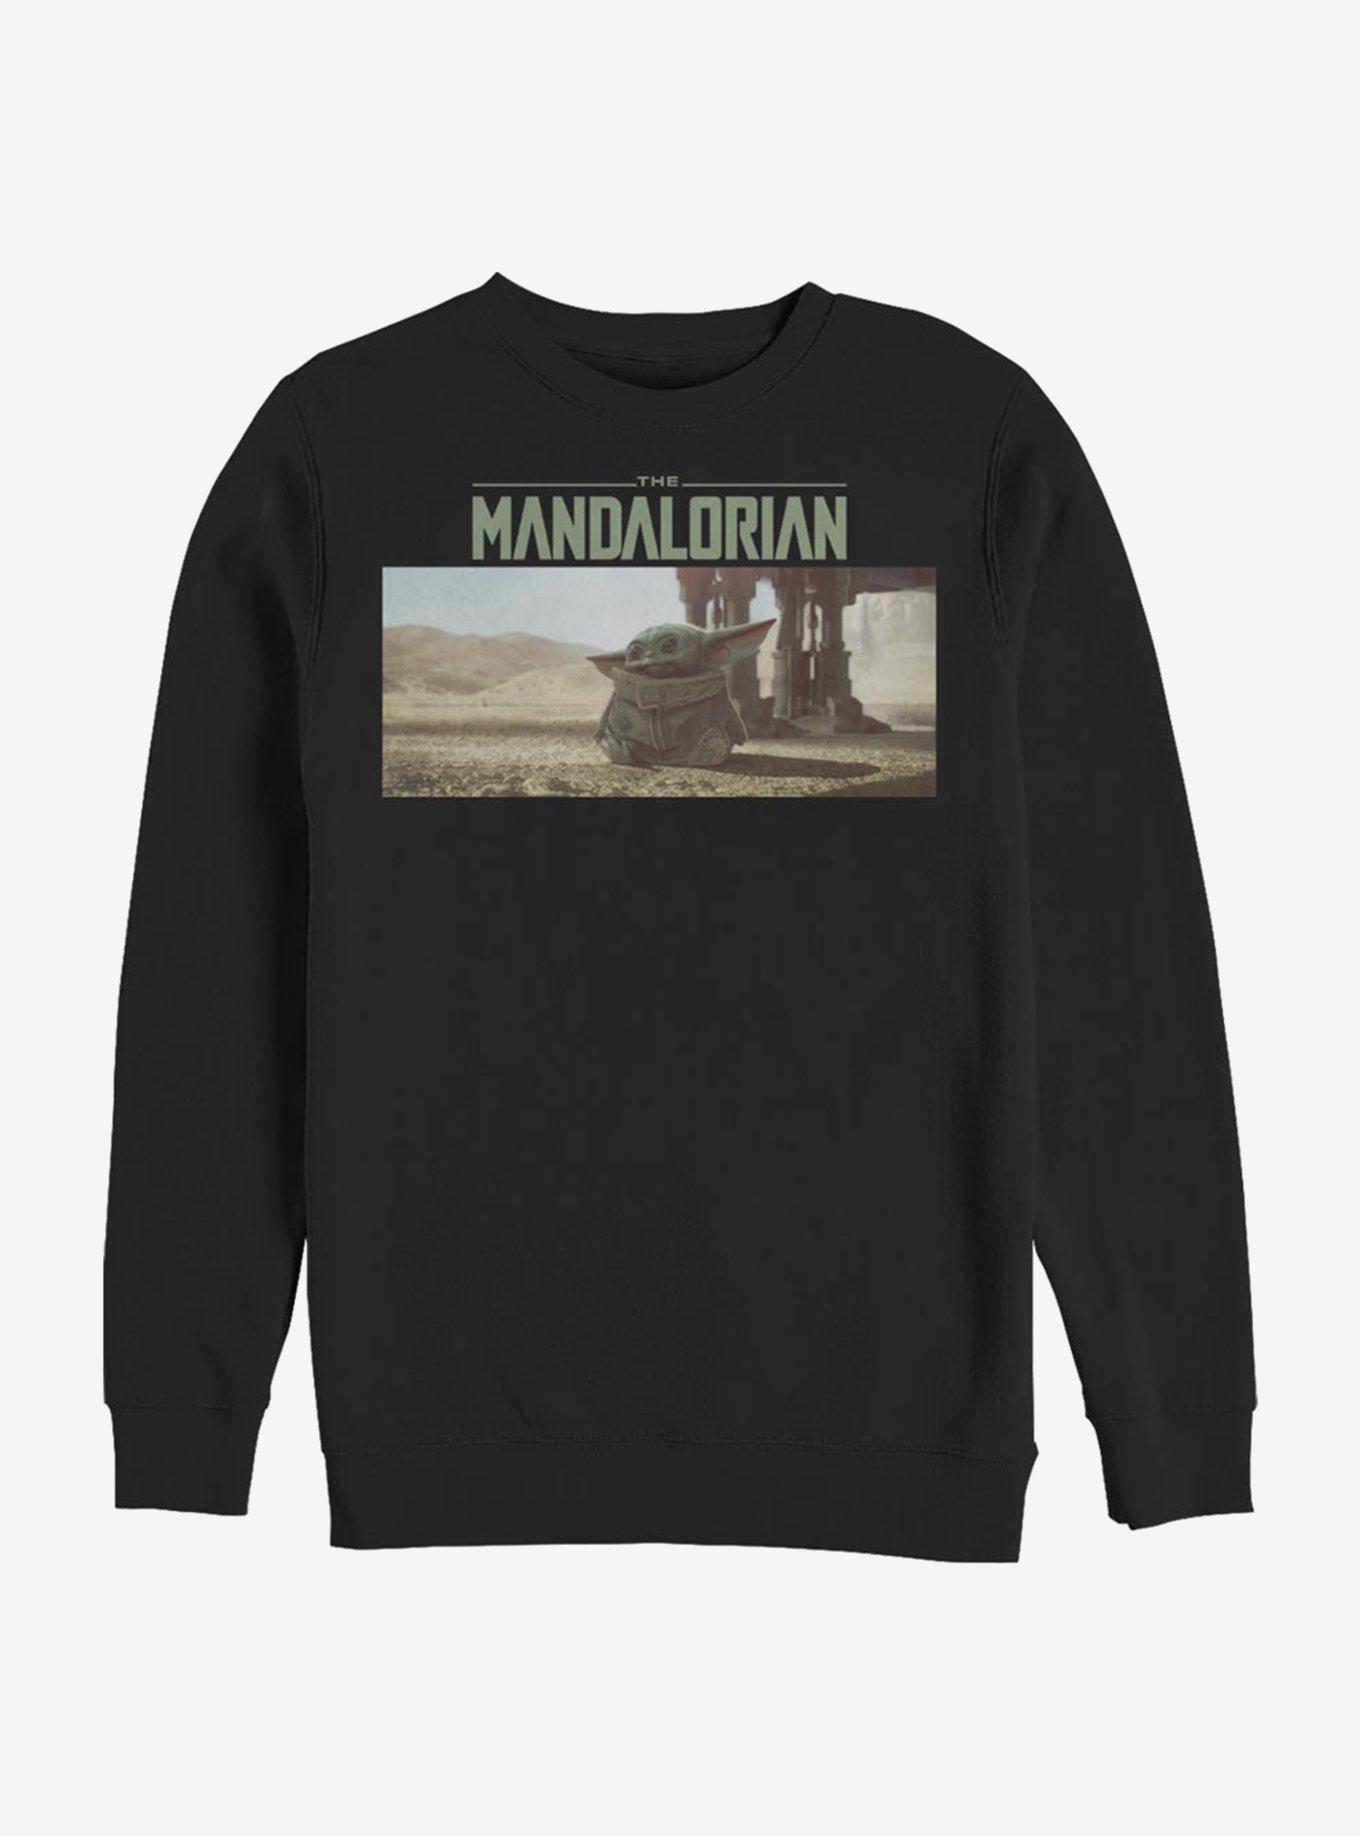 Star Wars The Mandalorian Child Still Looking Sweatshirt